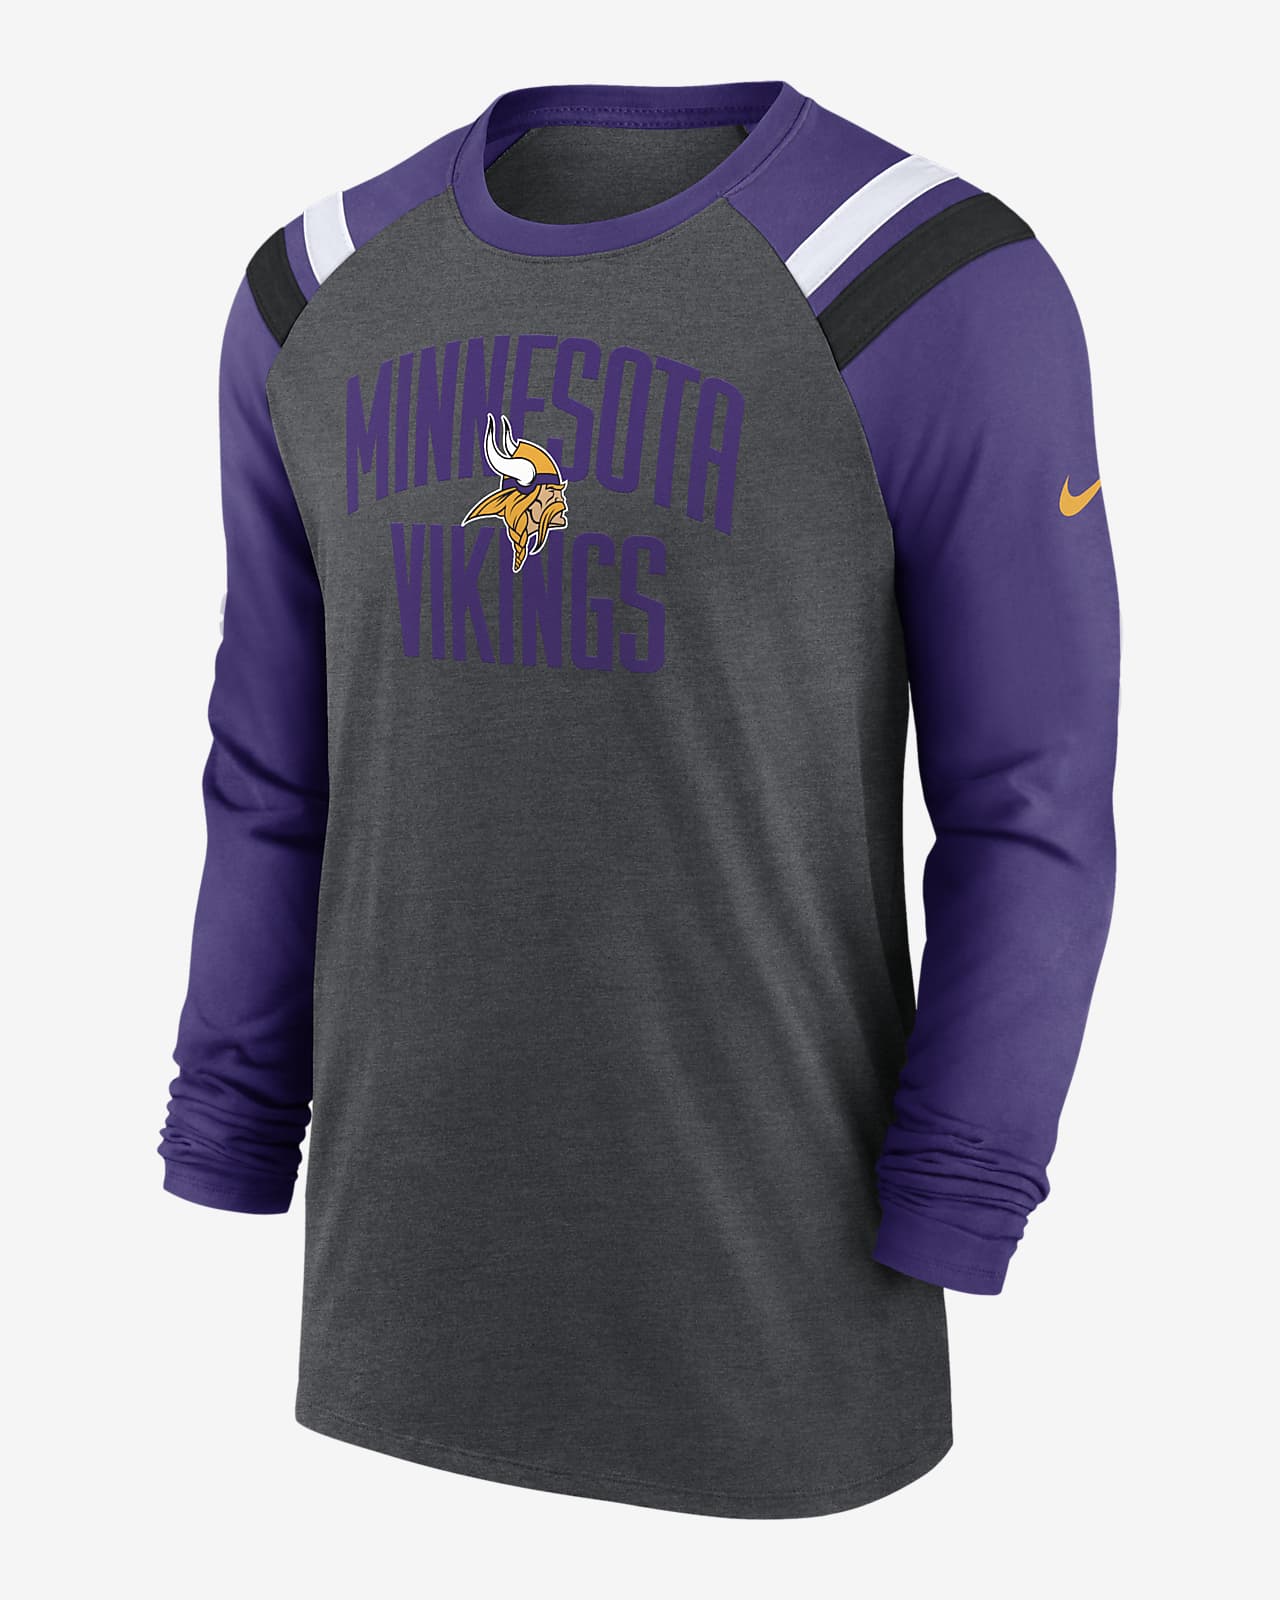 Nike Athletic Fashion (NFL Minnesota Vikings) Men's Long-Sleeve T-Shirt